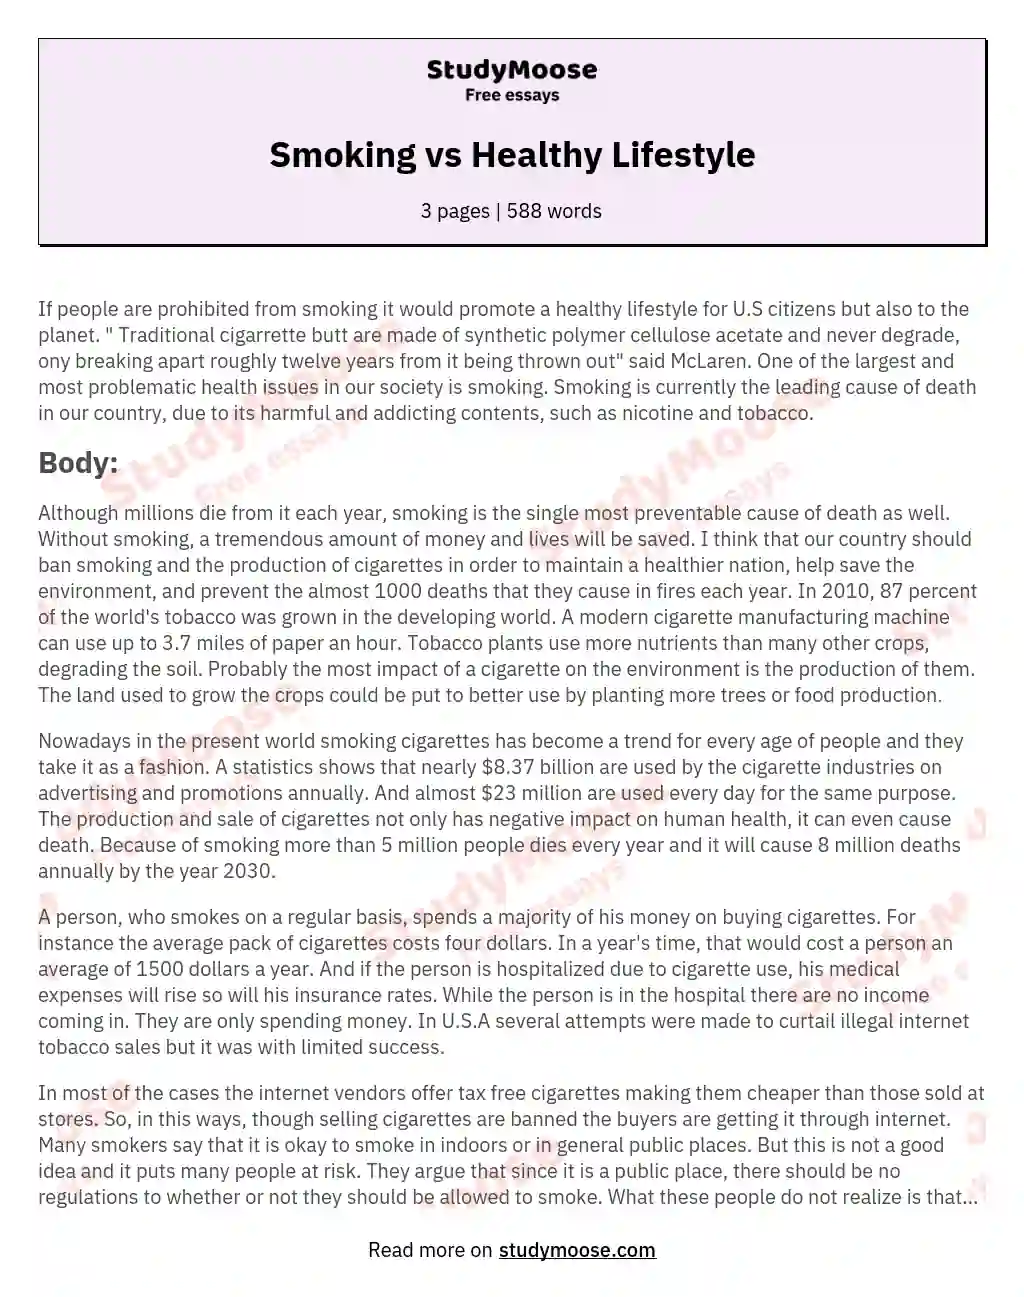 Smoking vs Healthy Lifestyle essay